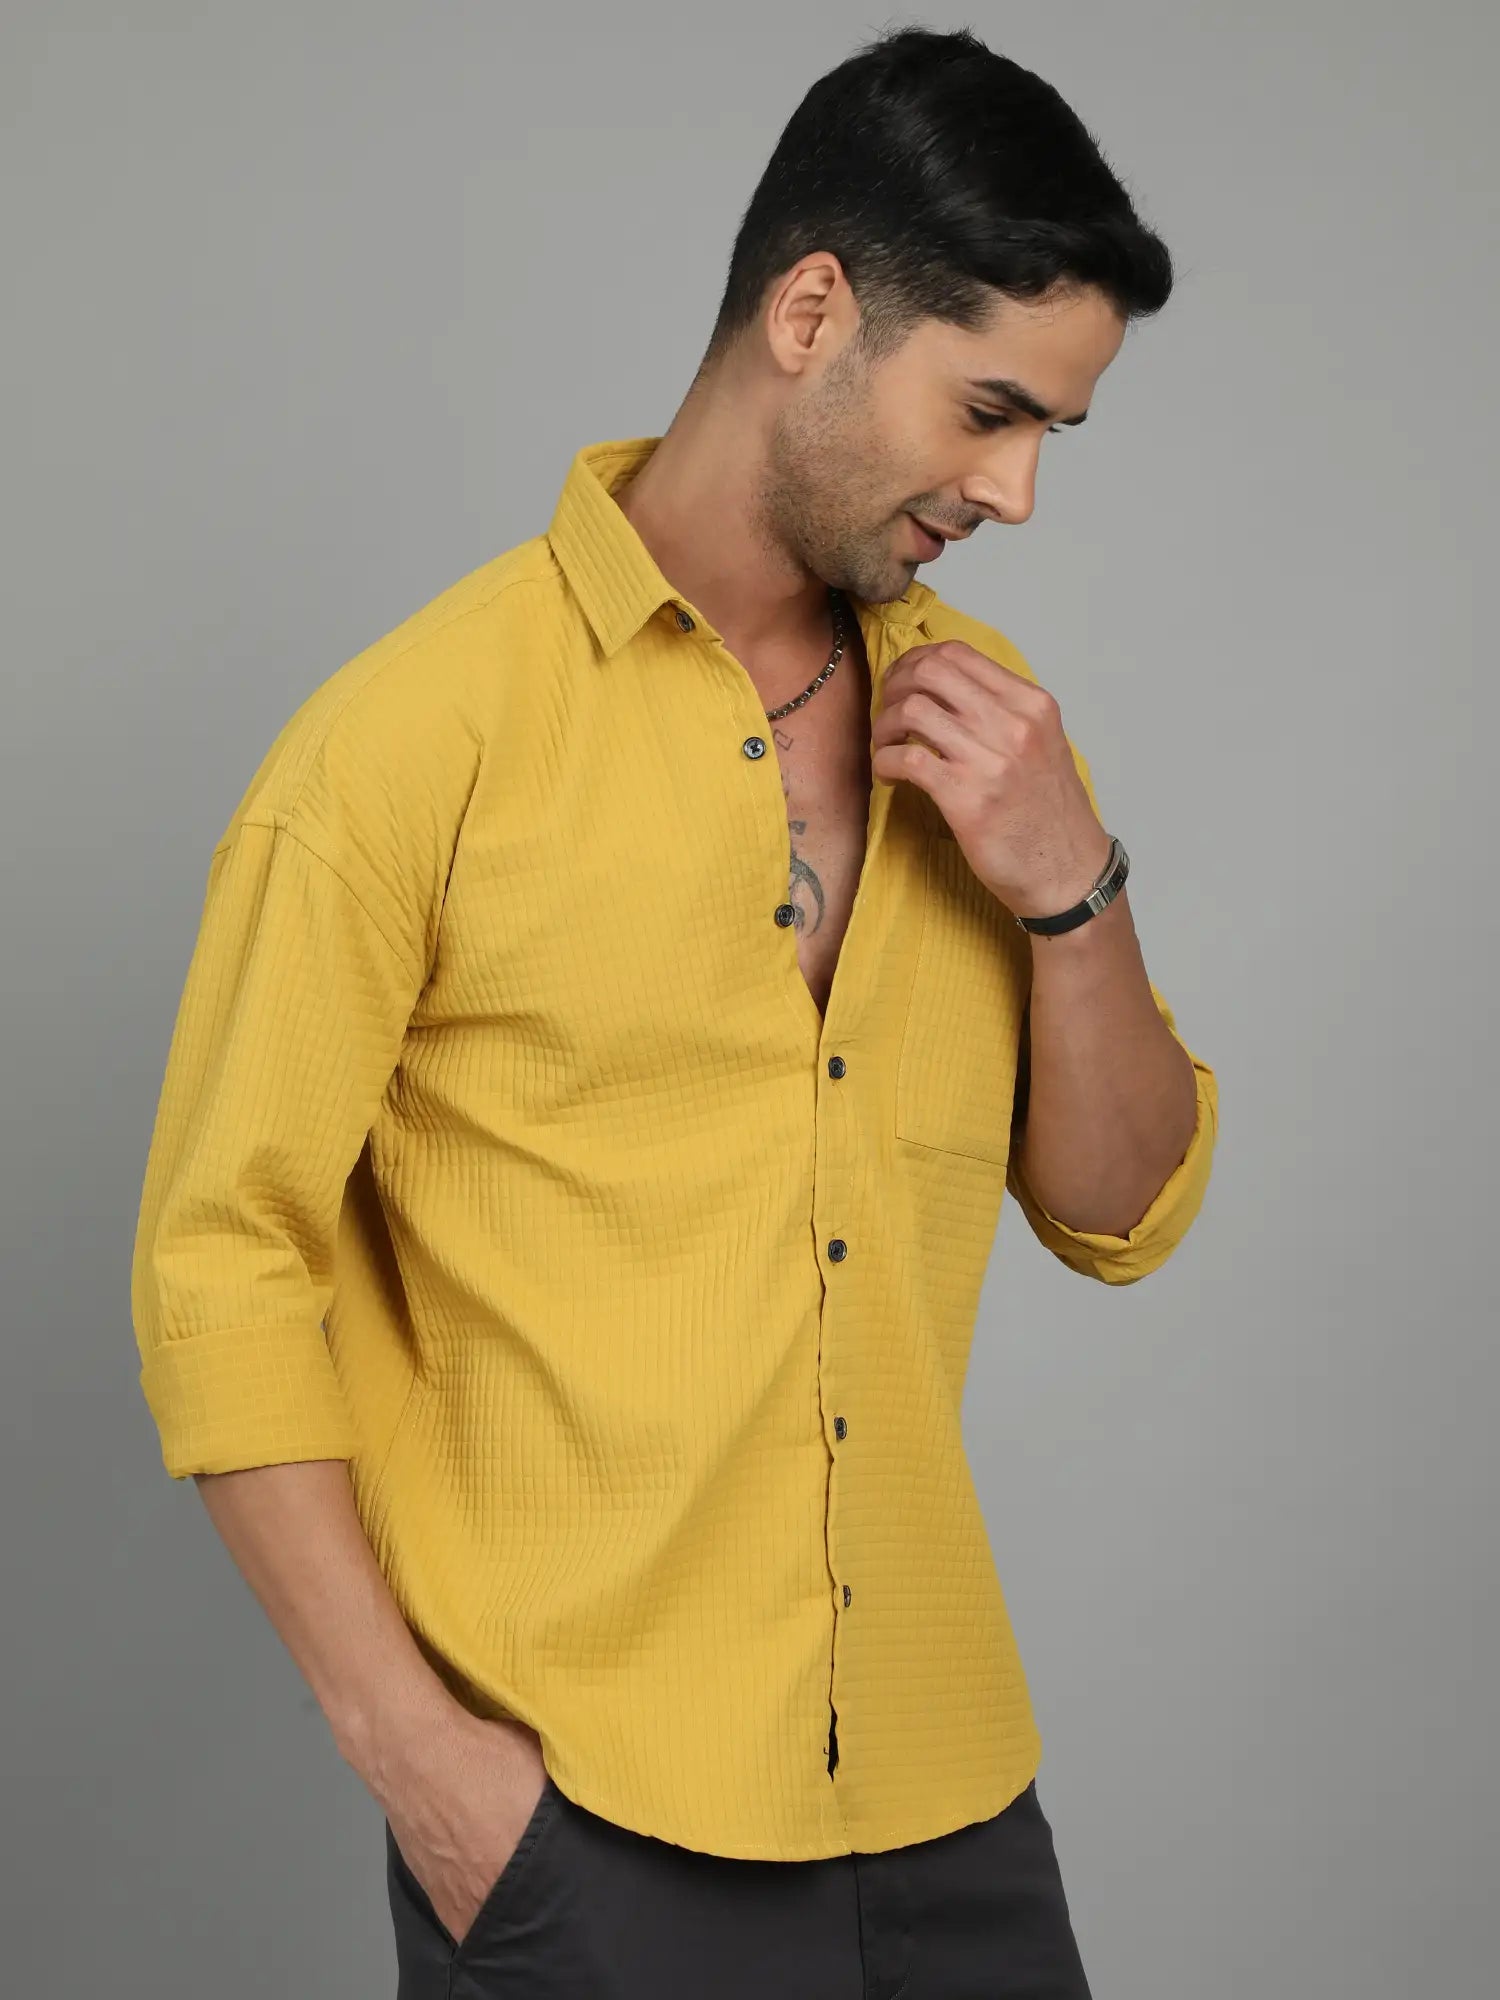 Vibrant Fellow Yellow Imported Drop Shoulder shirt for Men 